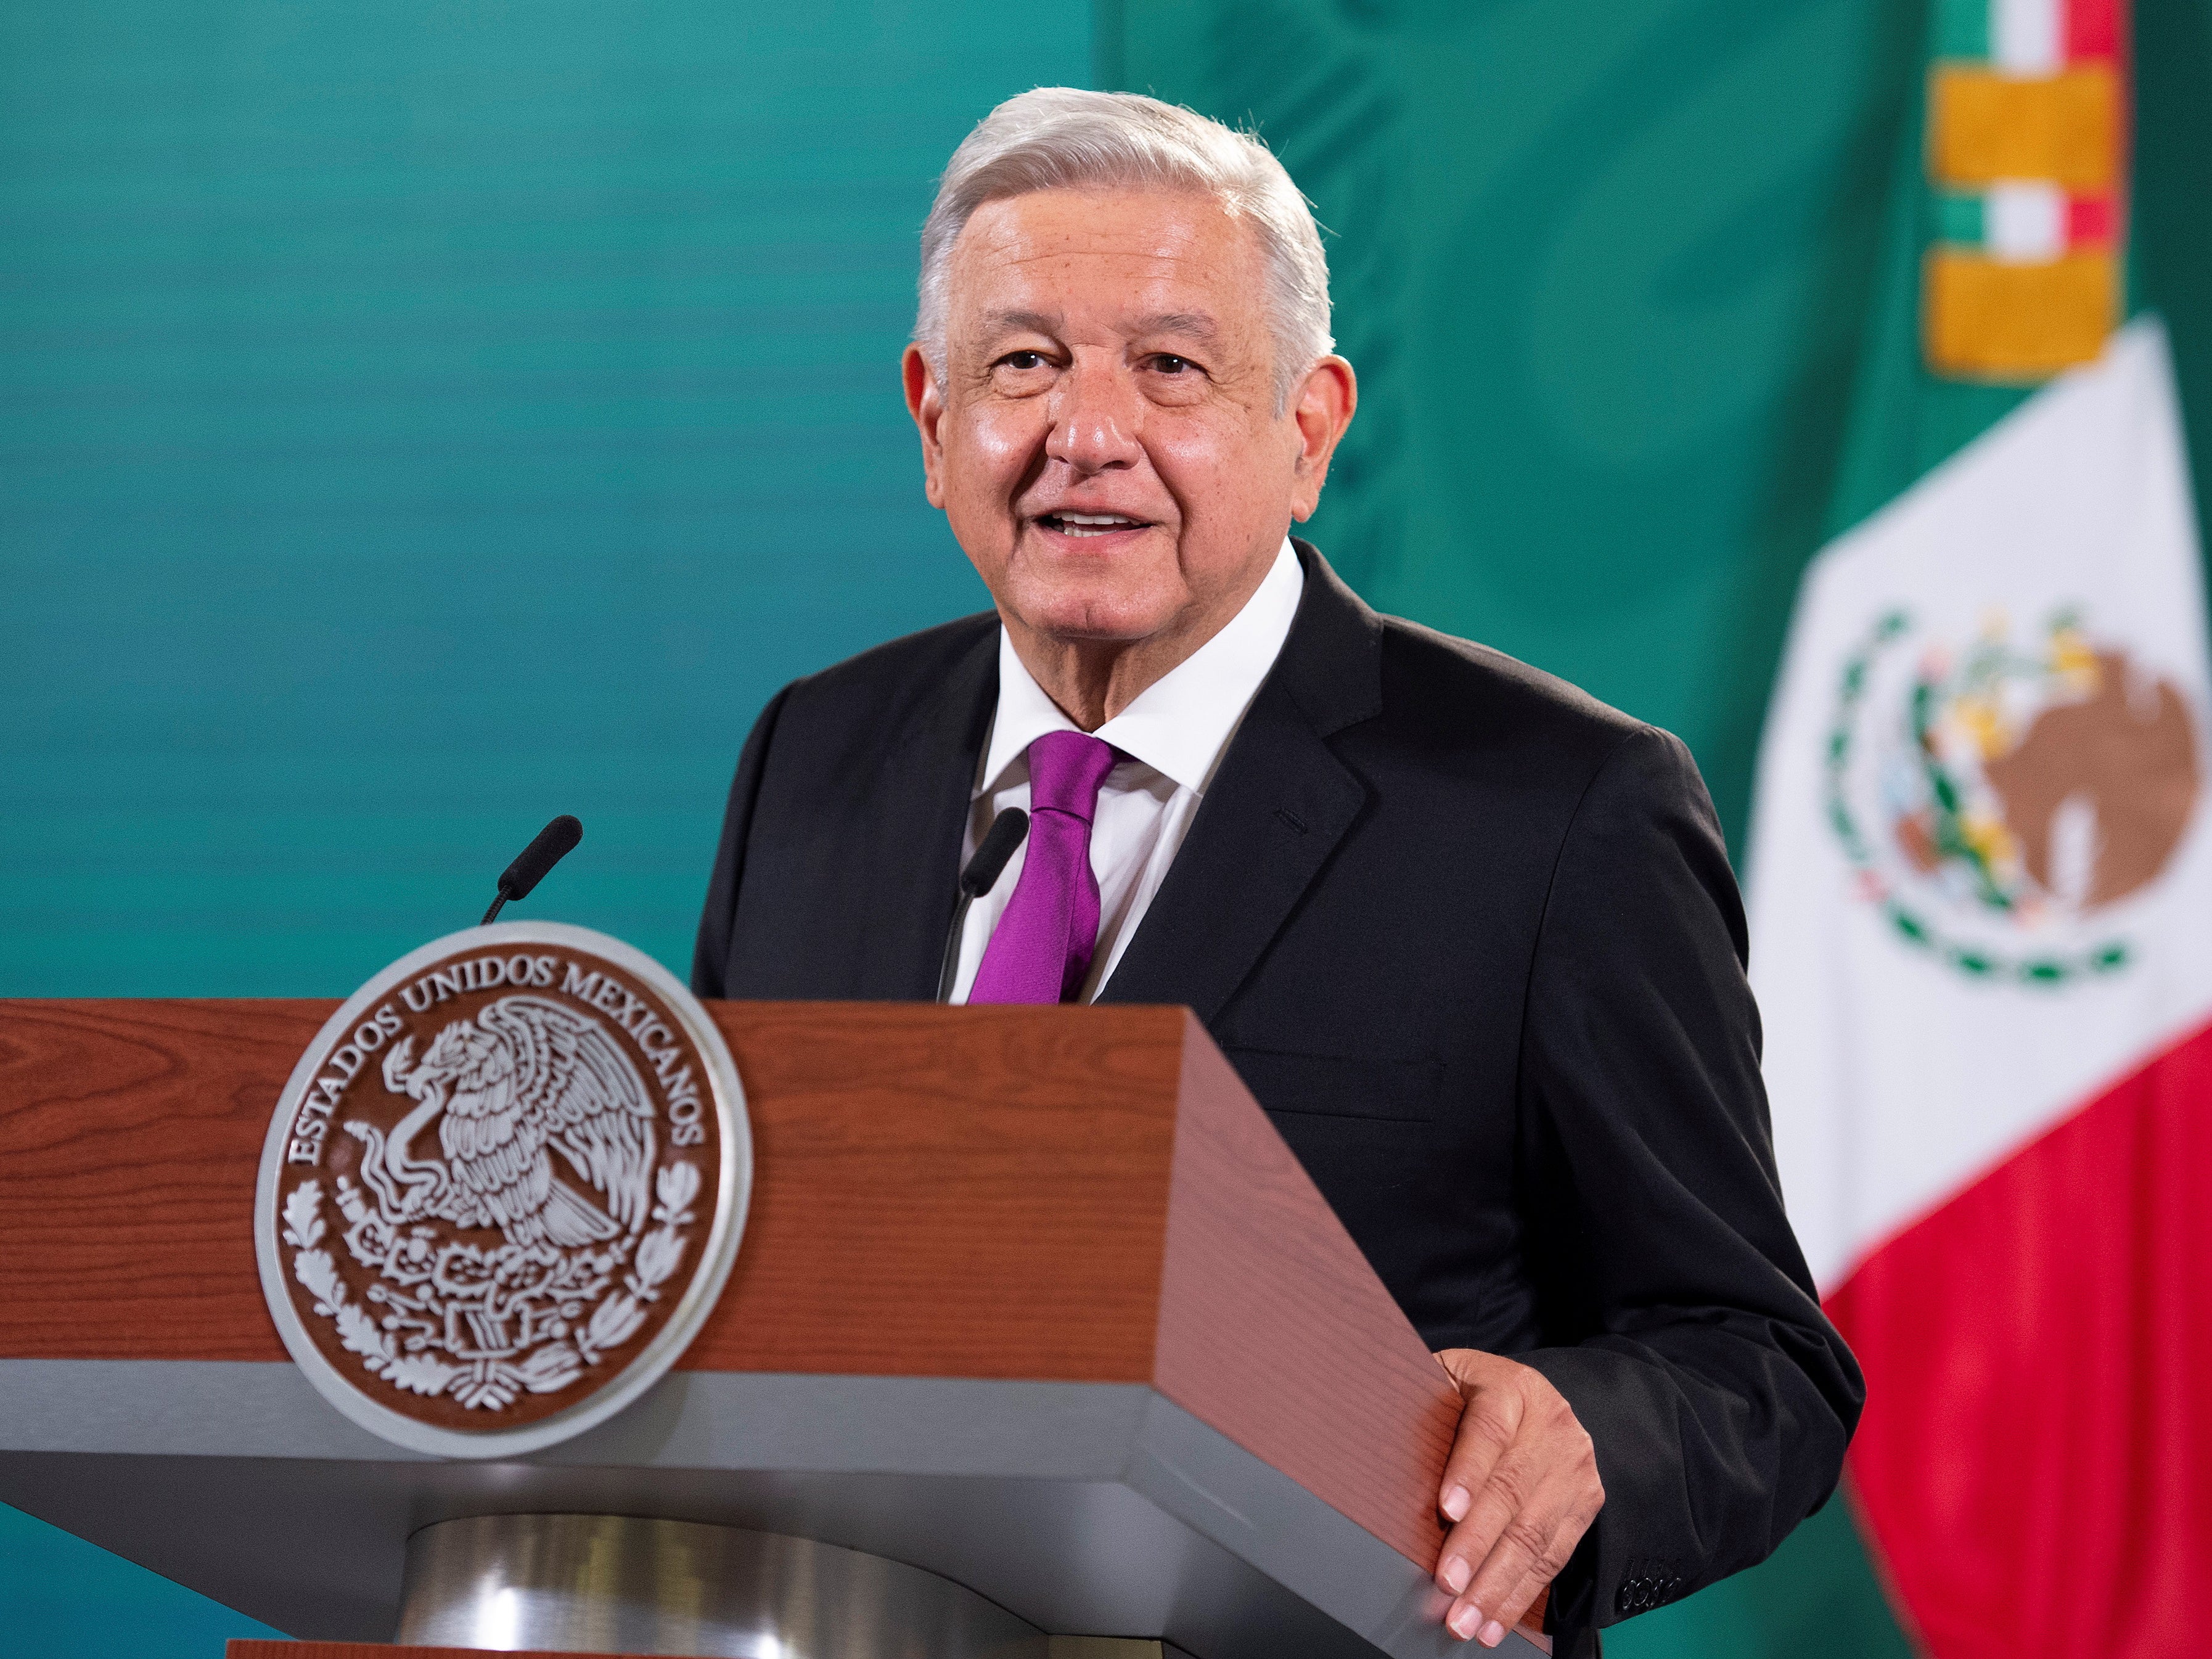 <p>Mr Lopez Obrador said his ‘conscience is clear’</p>